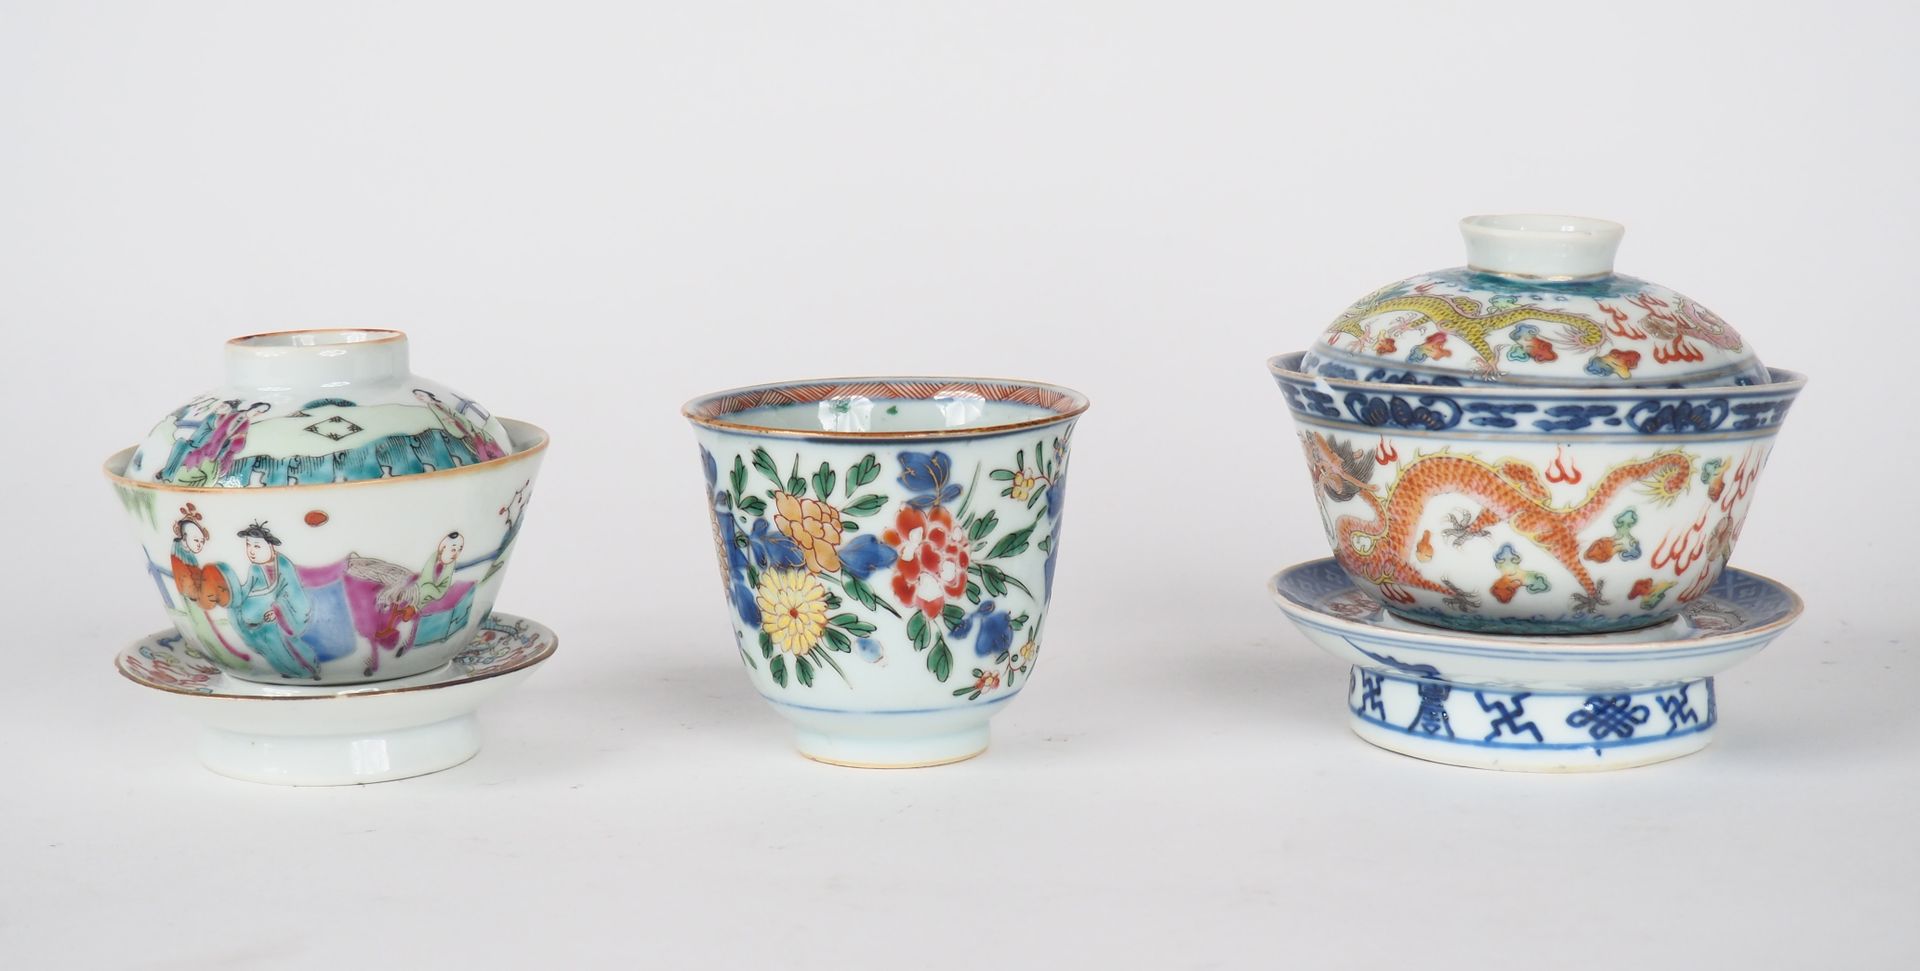 Null 中国，19世纪、 
套装包括： 
- 有盖杯及饰有龙纹的粉彩陈列架 
(修复) 
- 一个饰有花纹的玫瑰花杯 
- 一个带展示架的杯子，装饰有文字。
&hellip;